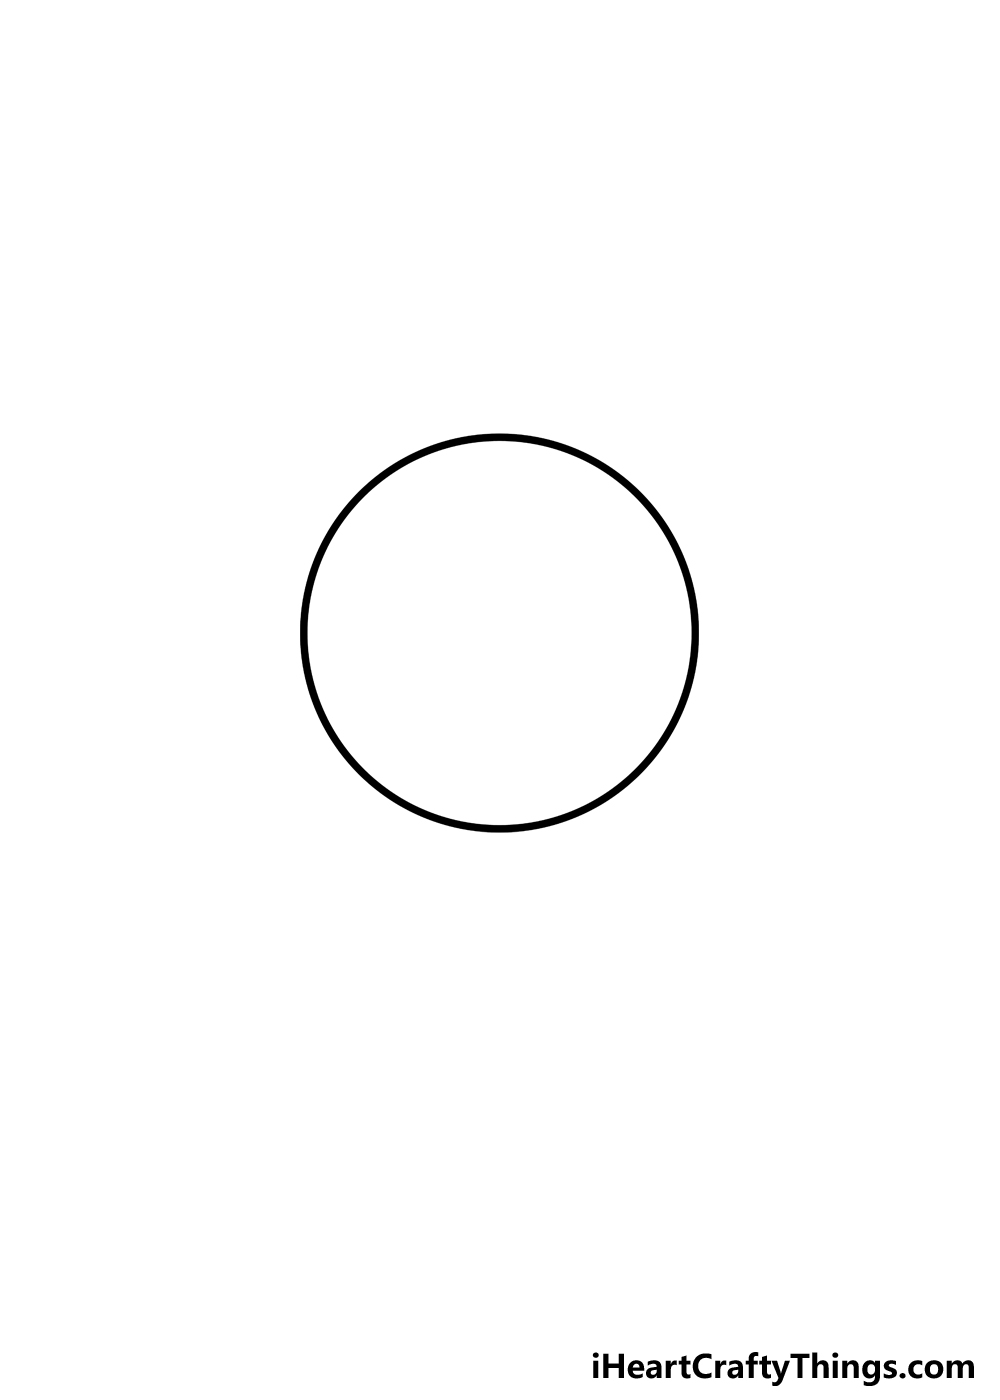 How to Draw An Eyeball step 2